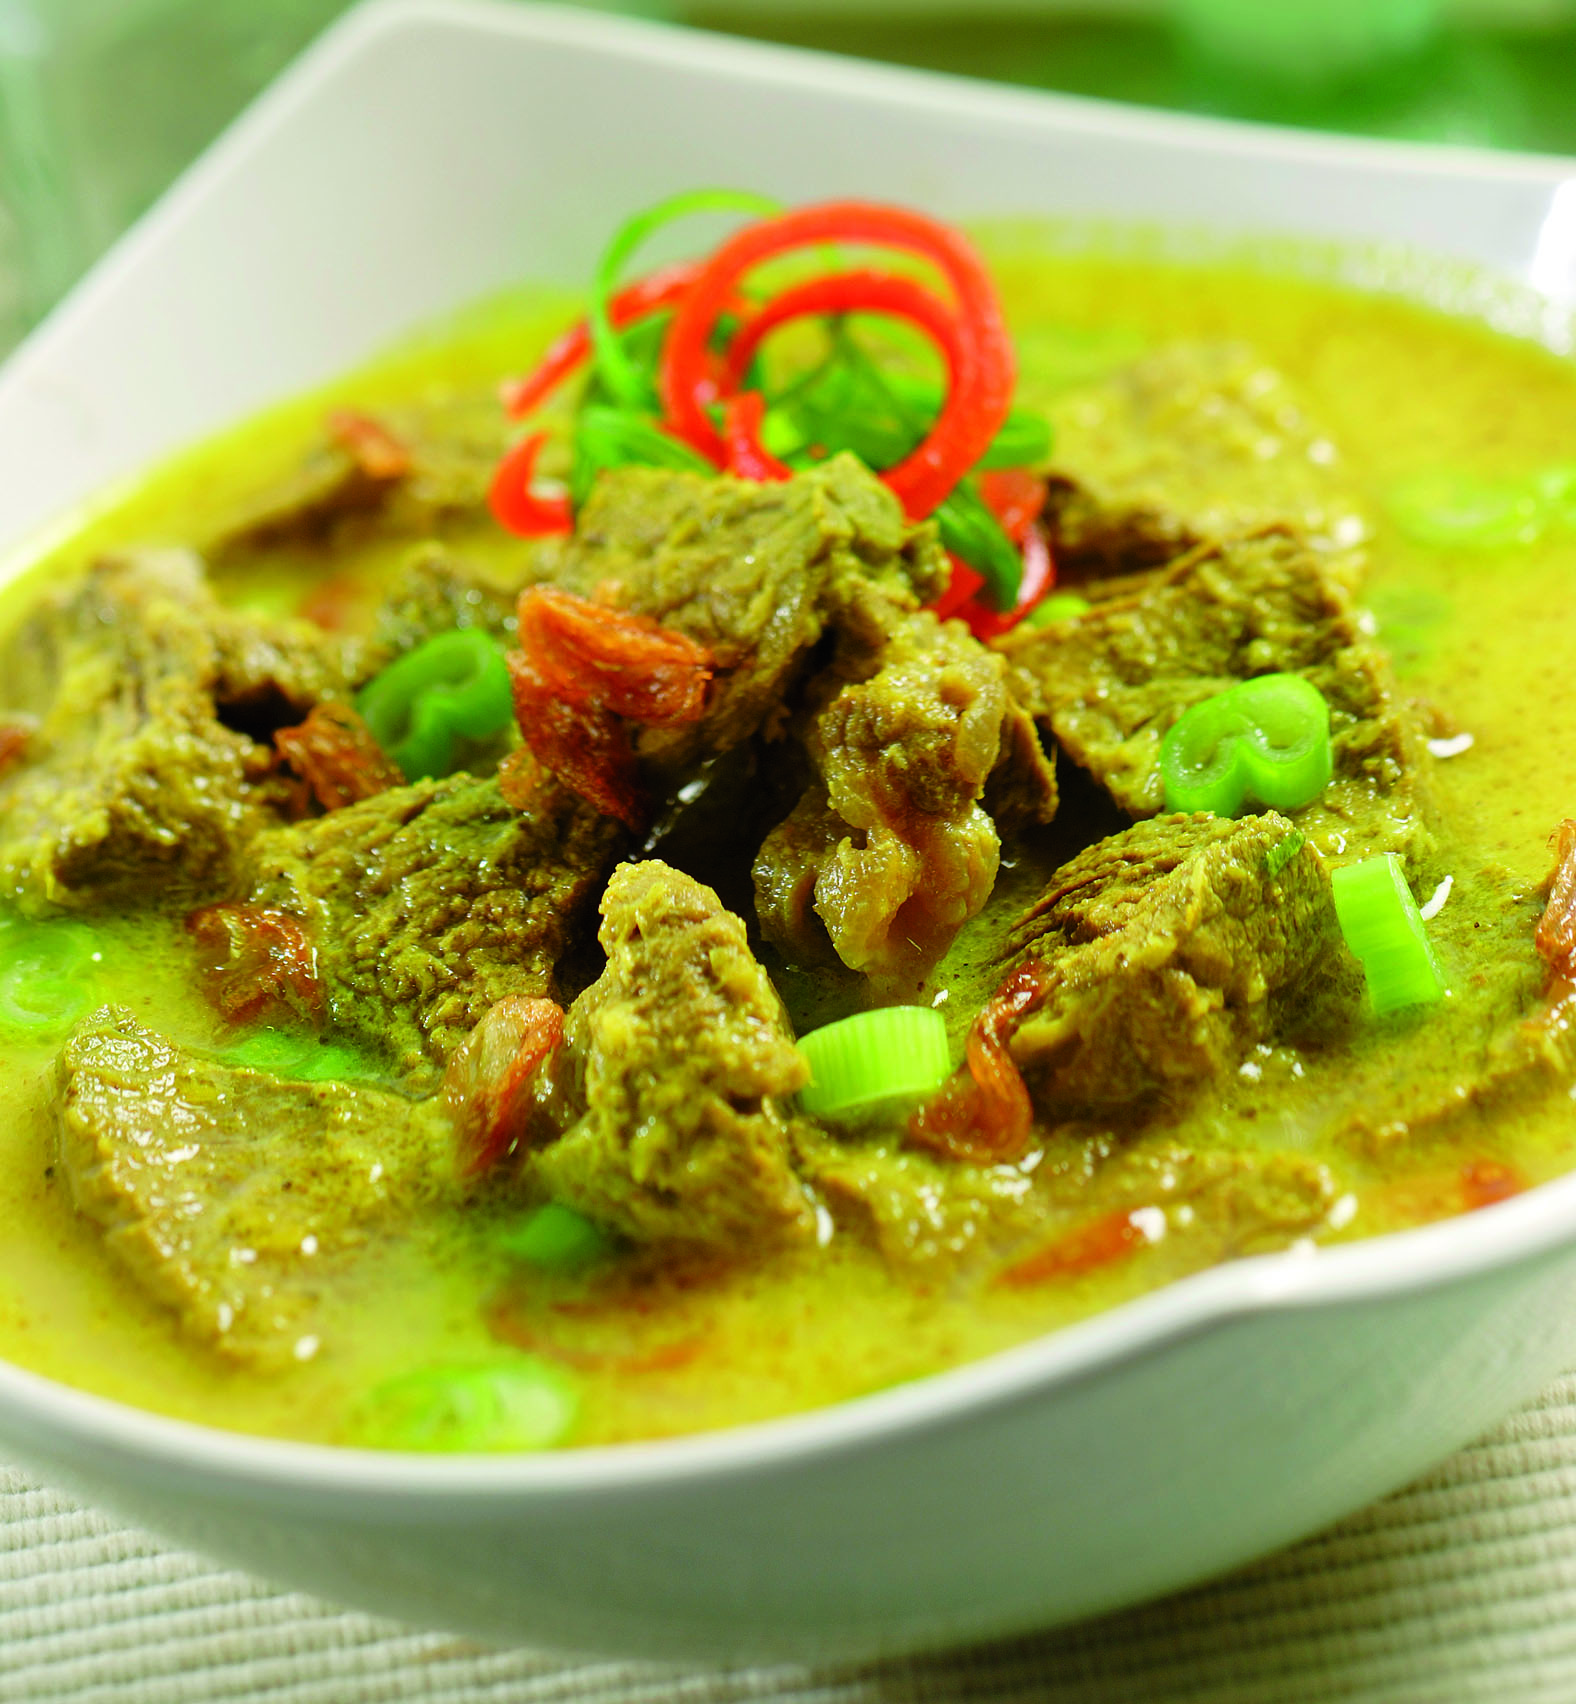 Resep-Masakan-Empal-Gentong-Khas-Cirebon